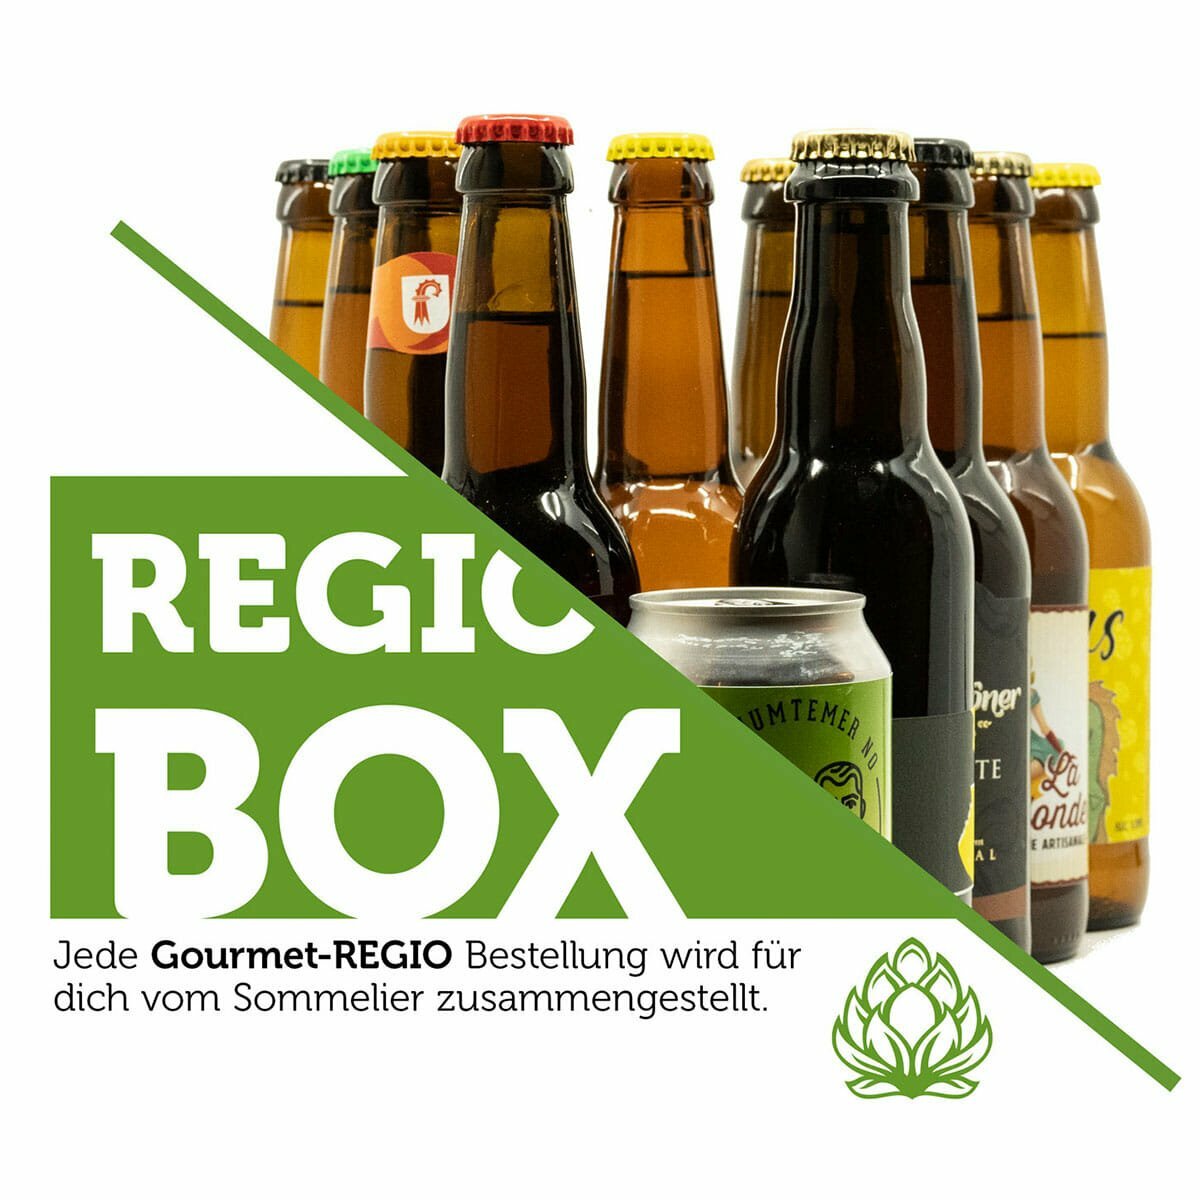 Craft Bier Regio Box